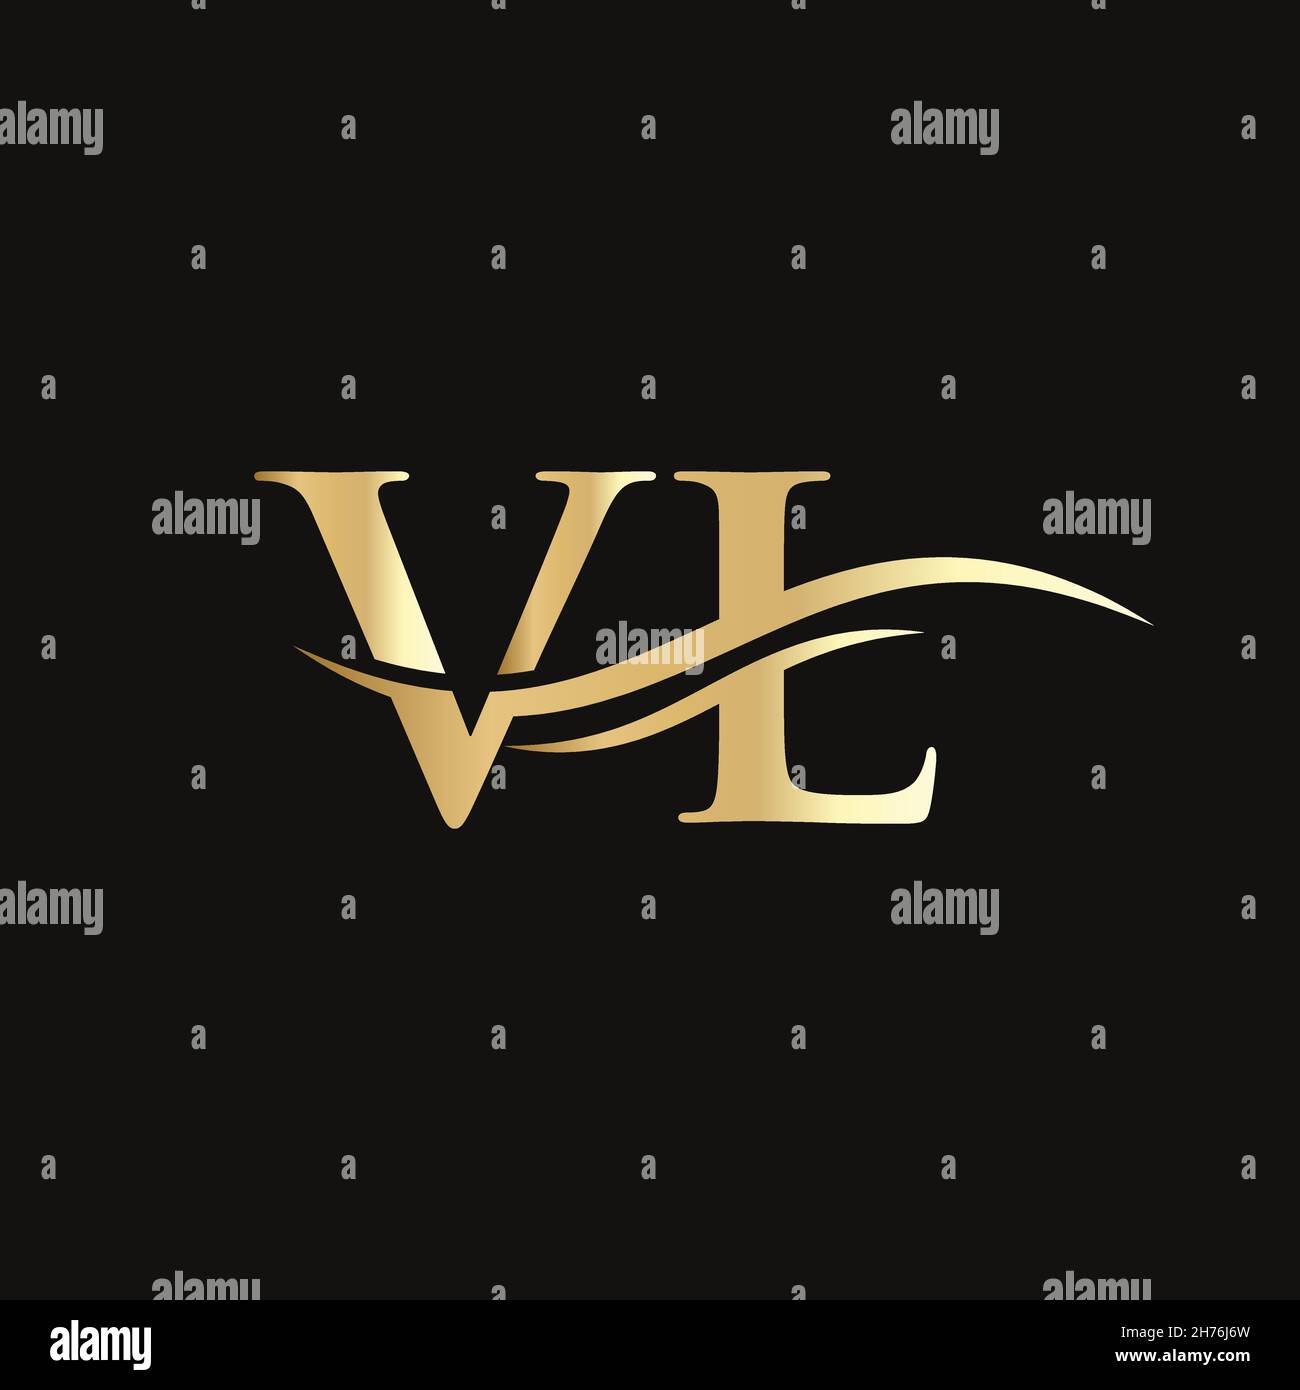 Premium Vector  Vl lv abstract initials letter monogram vector logo design